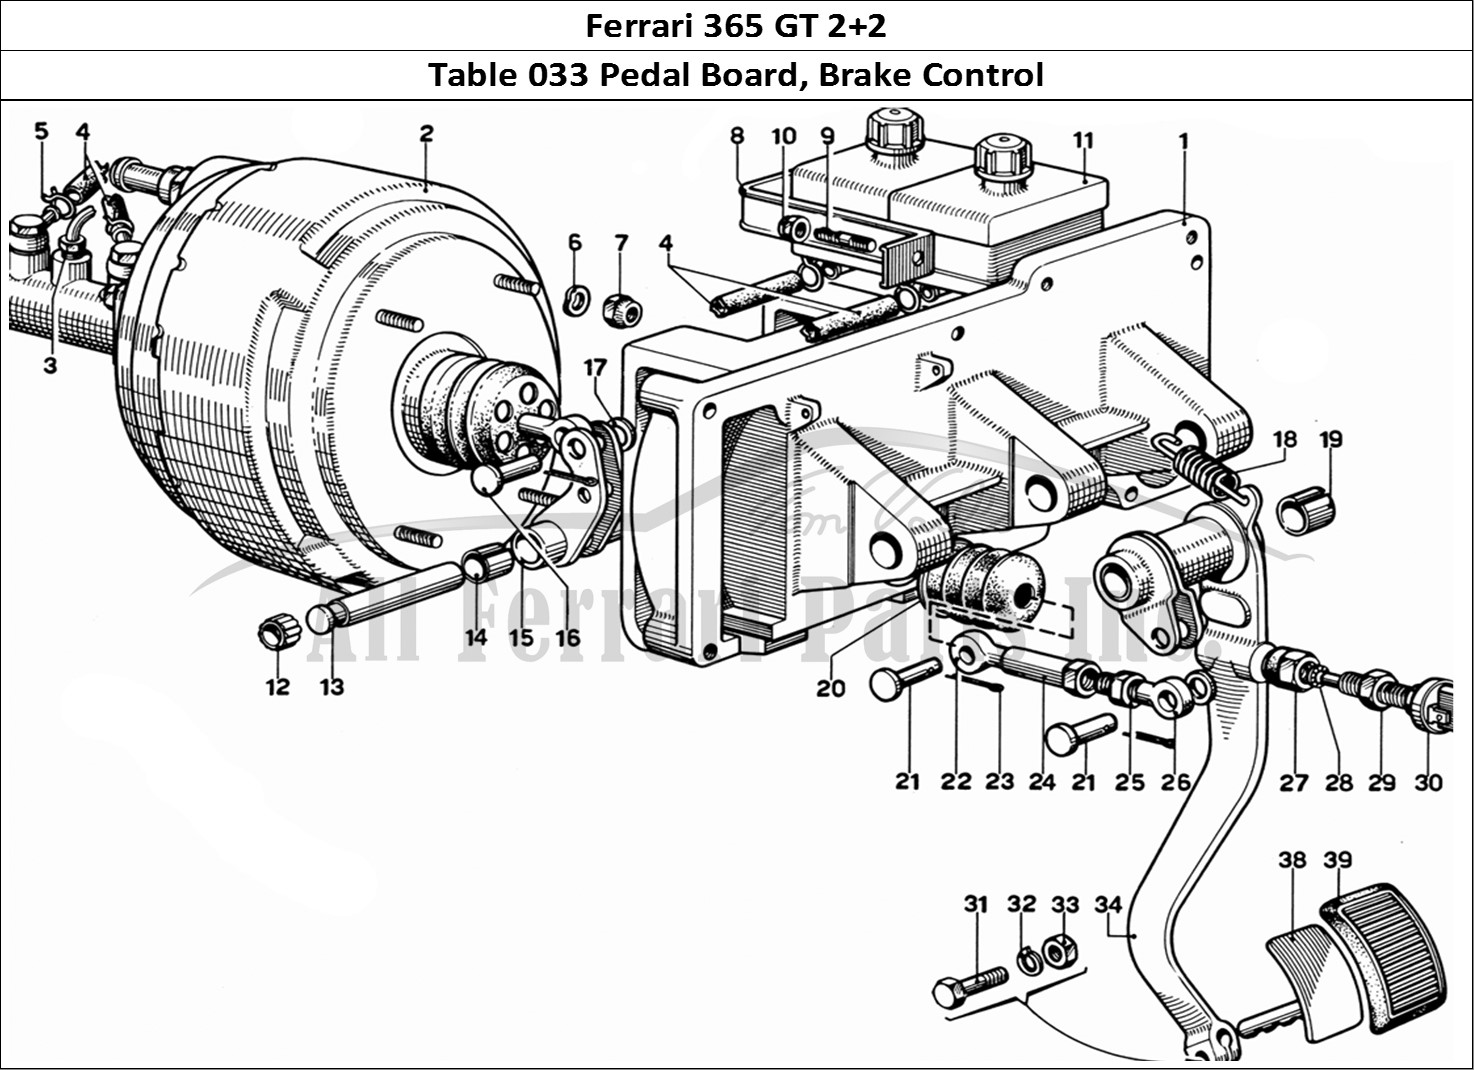 Ferrari Parts Ferrari 365 GT 2+2 (Mechanical) Page 033 Pedal Board - Brake Contr